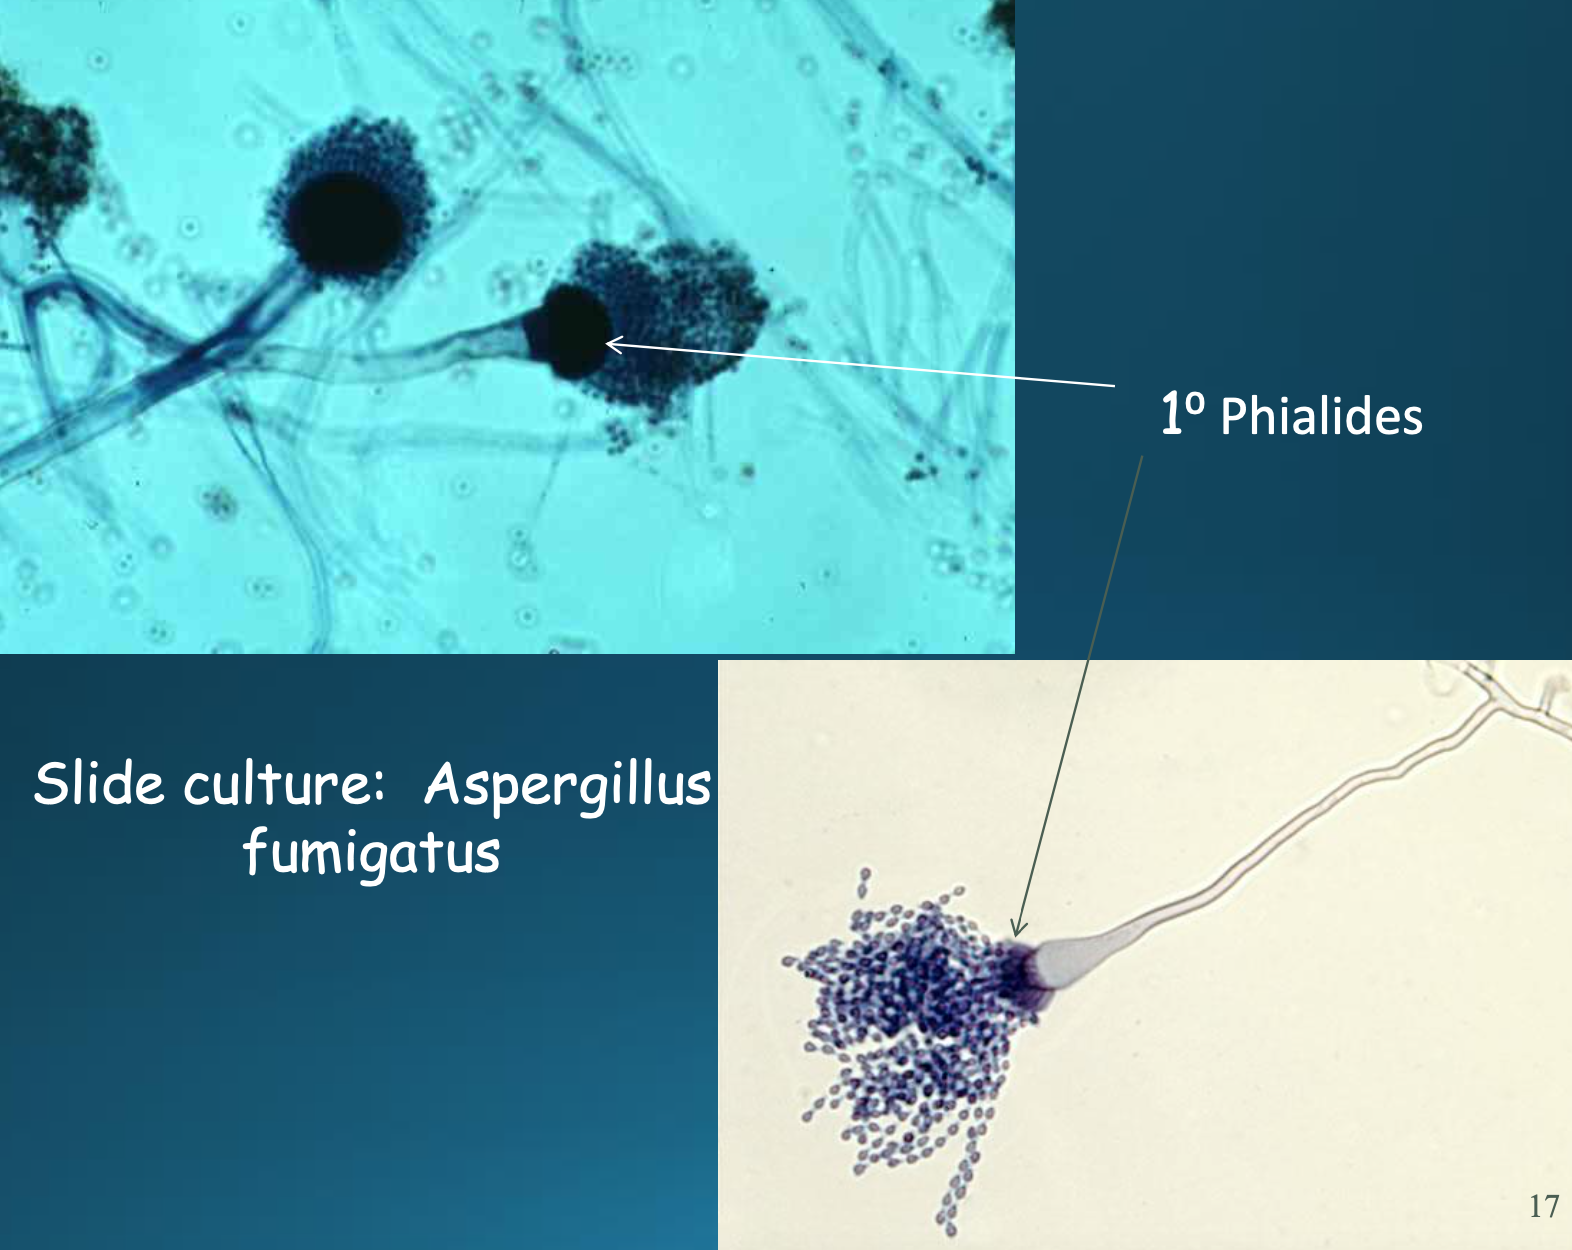 <p>Aspergillus fumigatus microscopically and macroscopically</p>